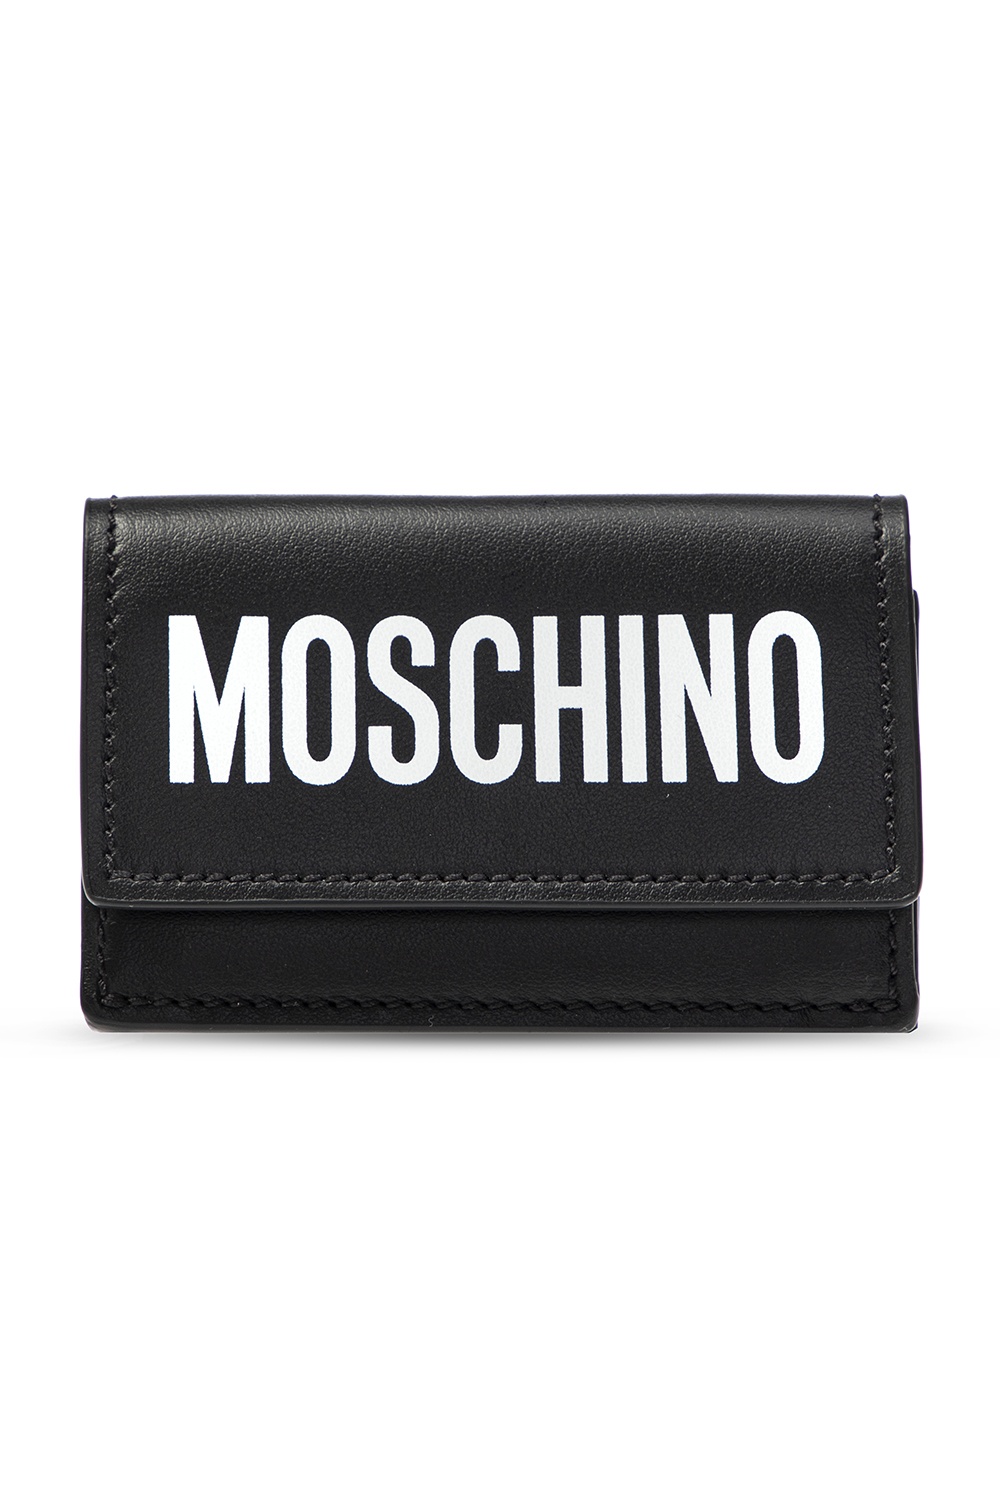 Black Card case with logo Moschino - Vitkac Italy